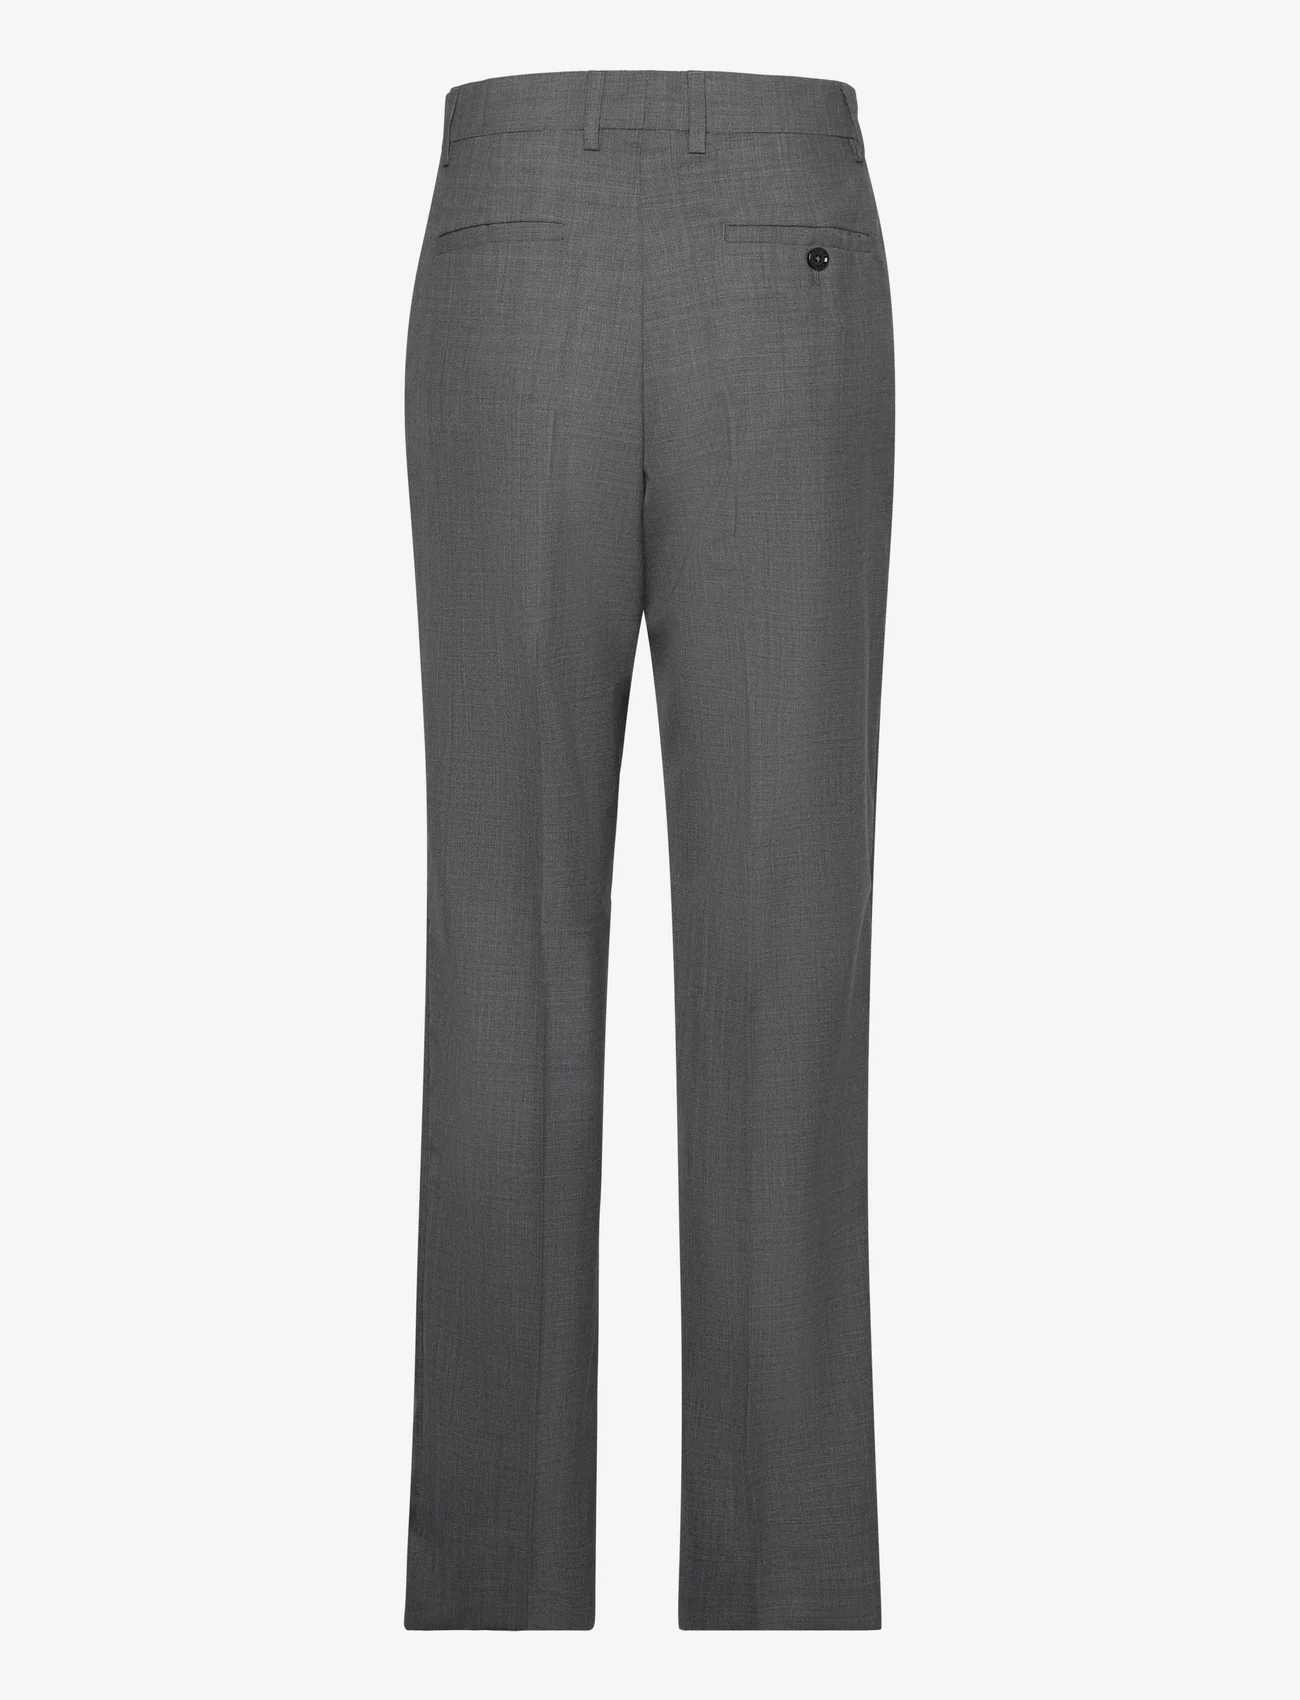 Hope - Straight-leg Suit Trousers - habitbukser - grey melange - 1